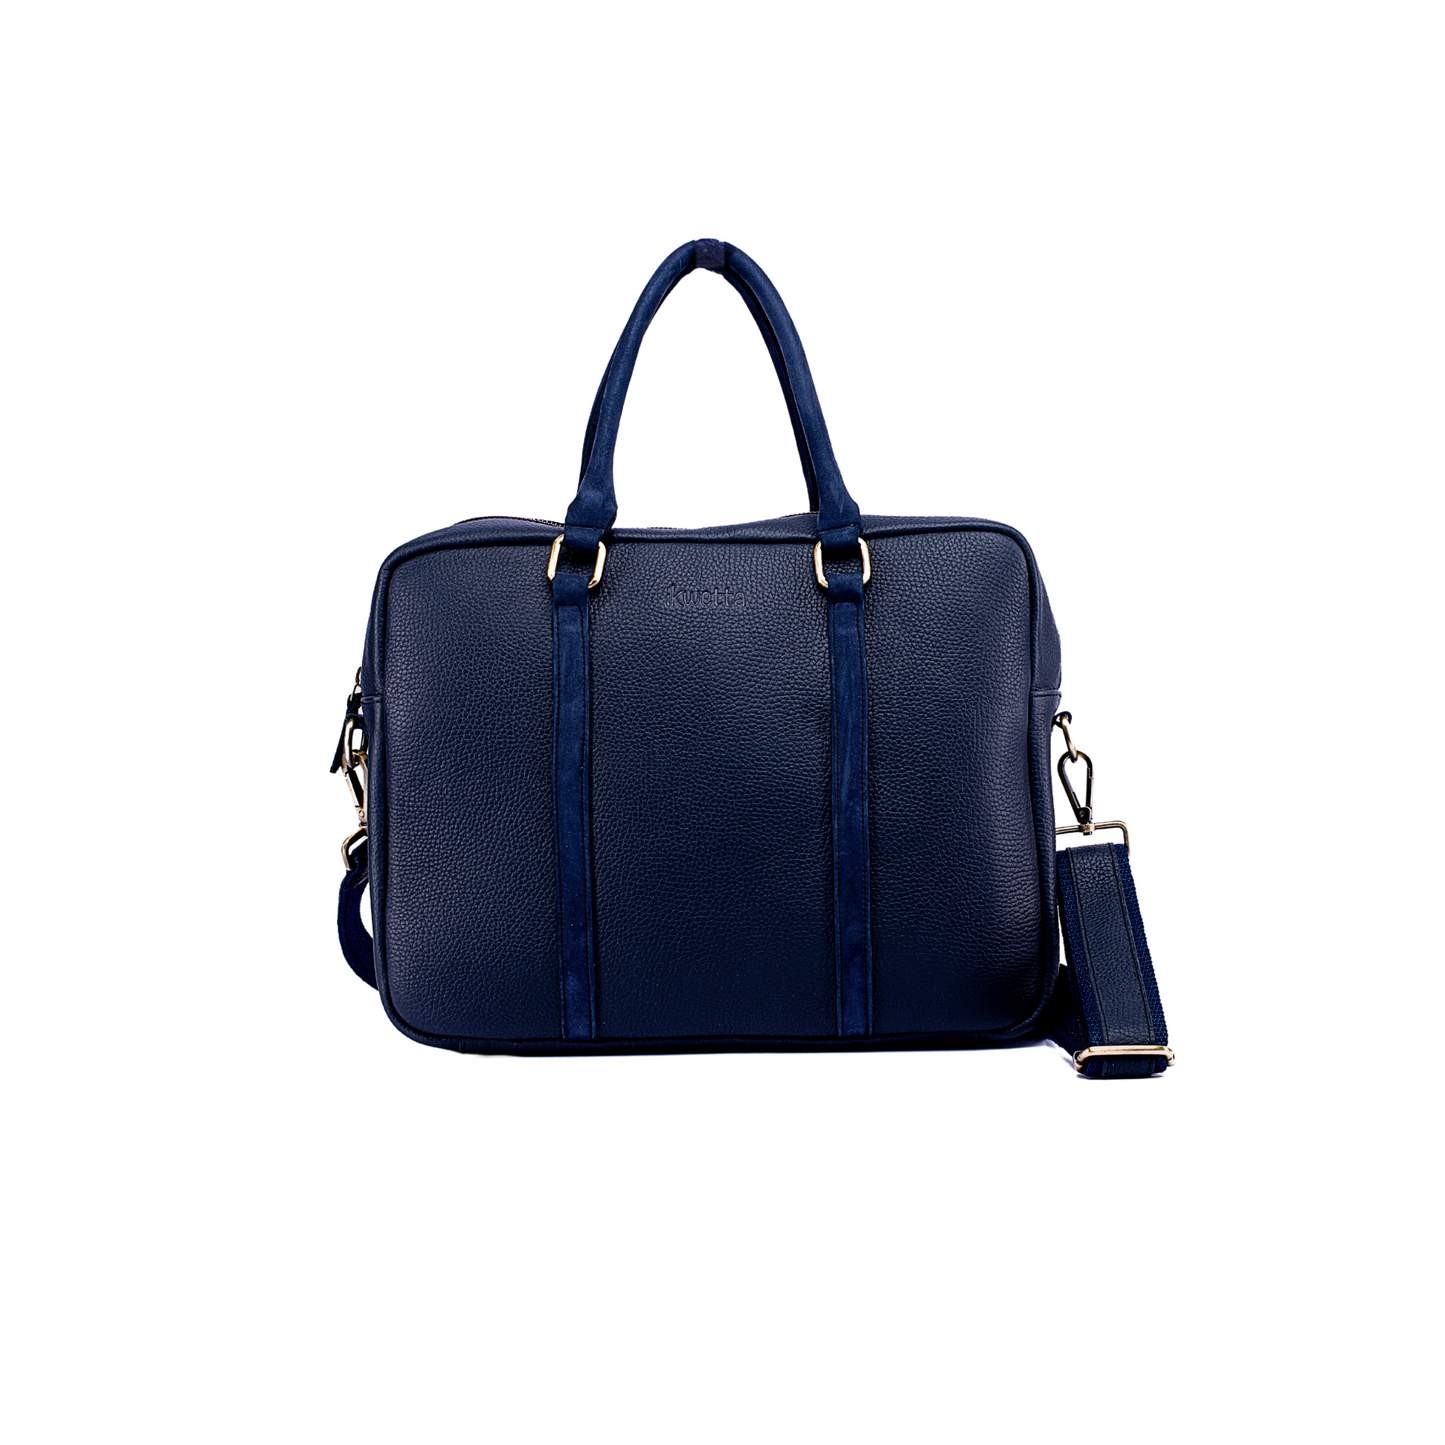 Cory laptop bag in Navy blue milled leather with adjustable shoulder strap